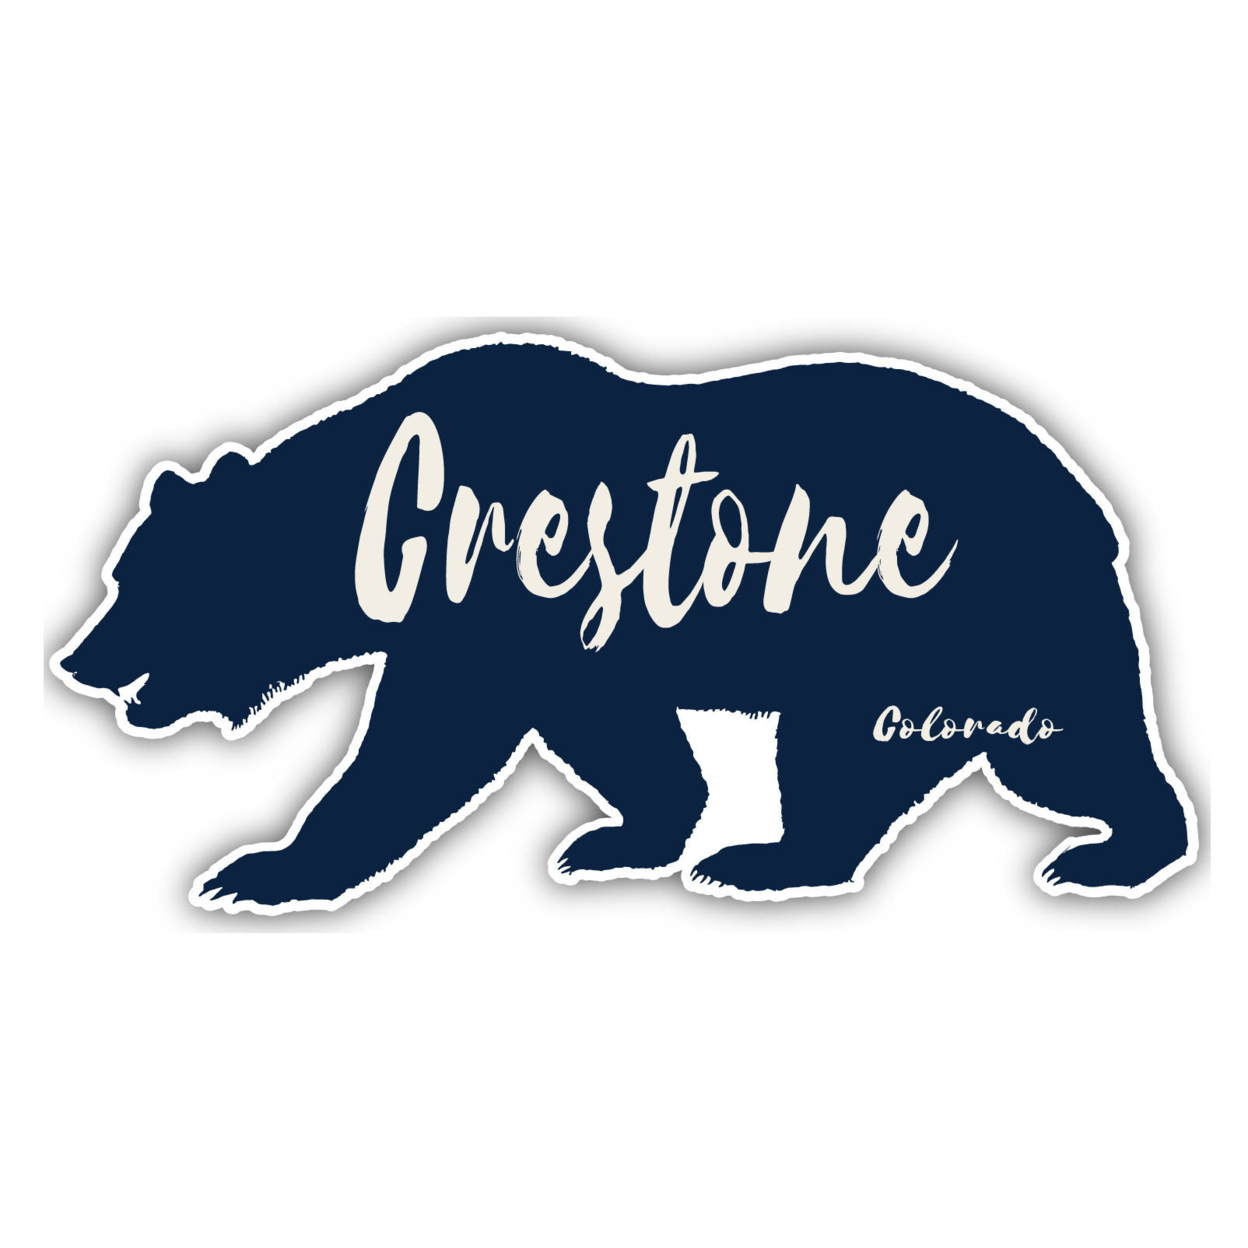 Crestone Colorado Souvenir Decorative Stickers (Choose Theme And Size) - 4-Pack, 8-Inch, Bear